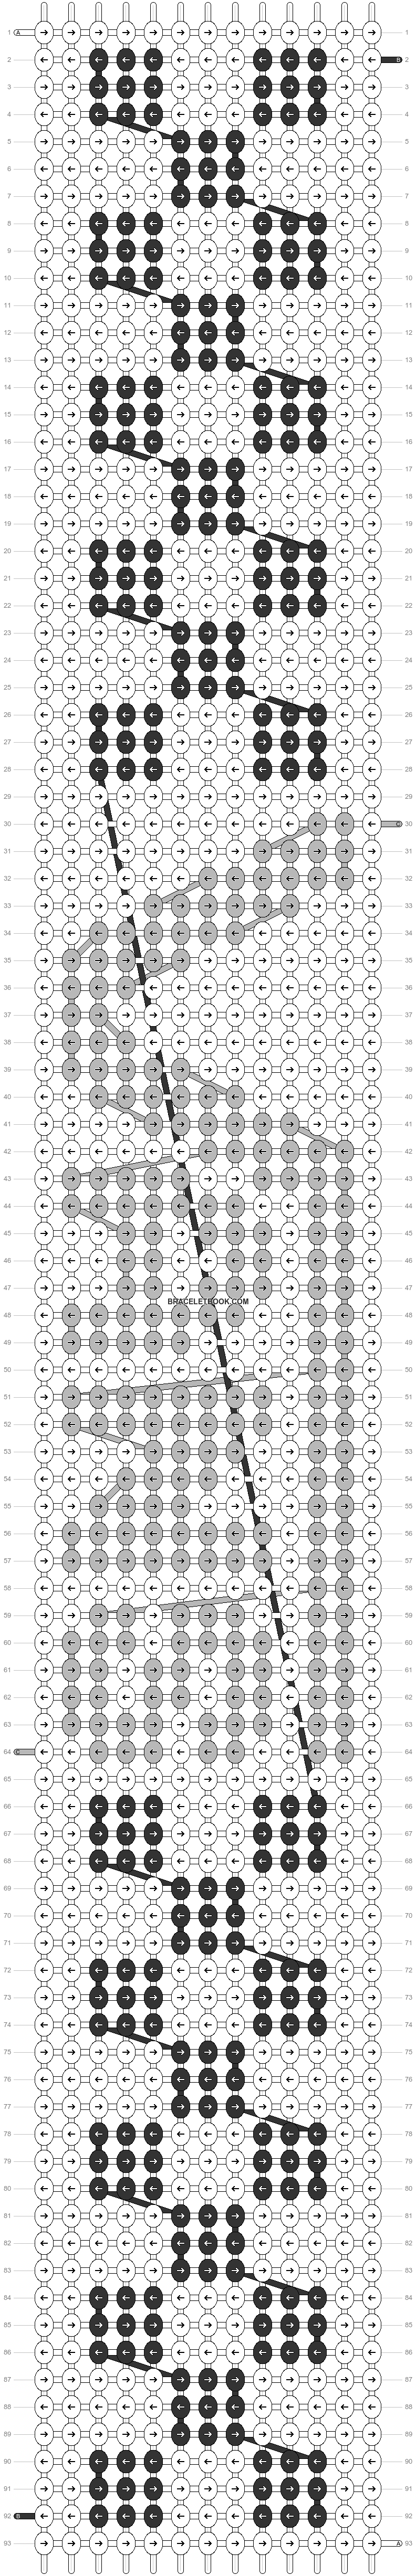 Alpha pattern #44004 variation #62643 pattern